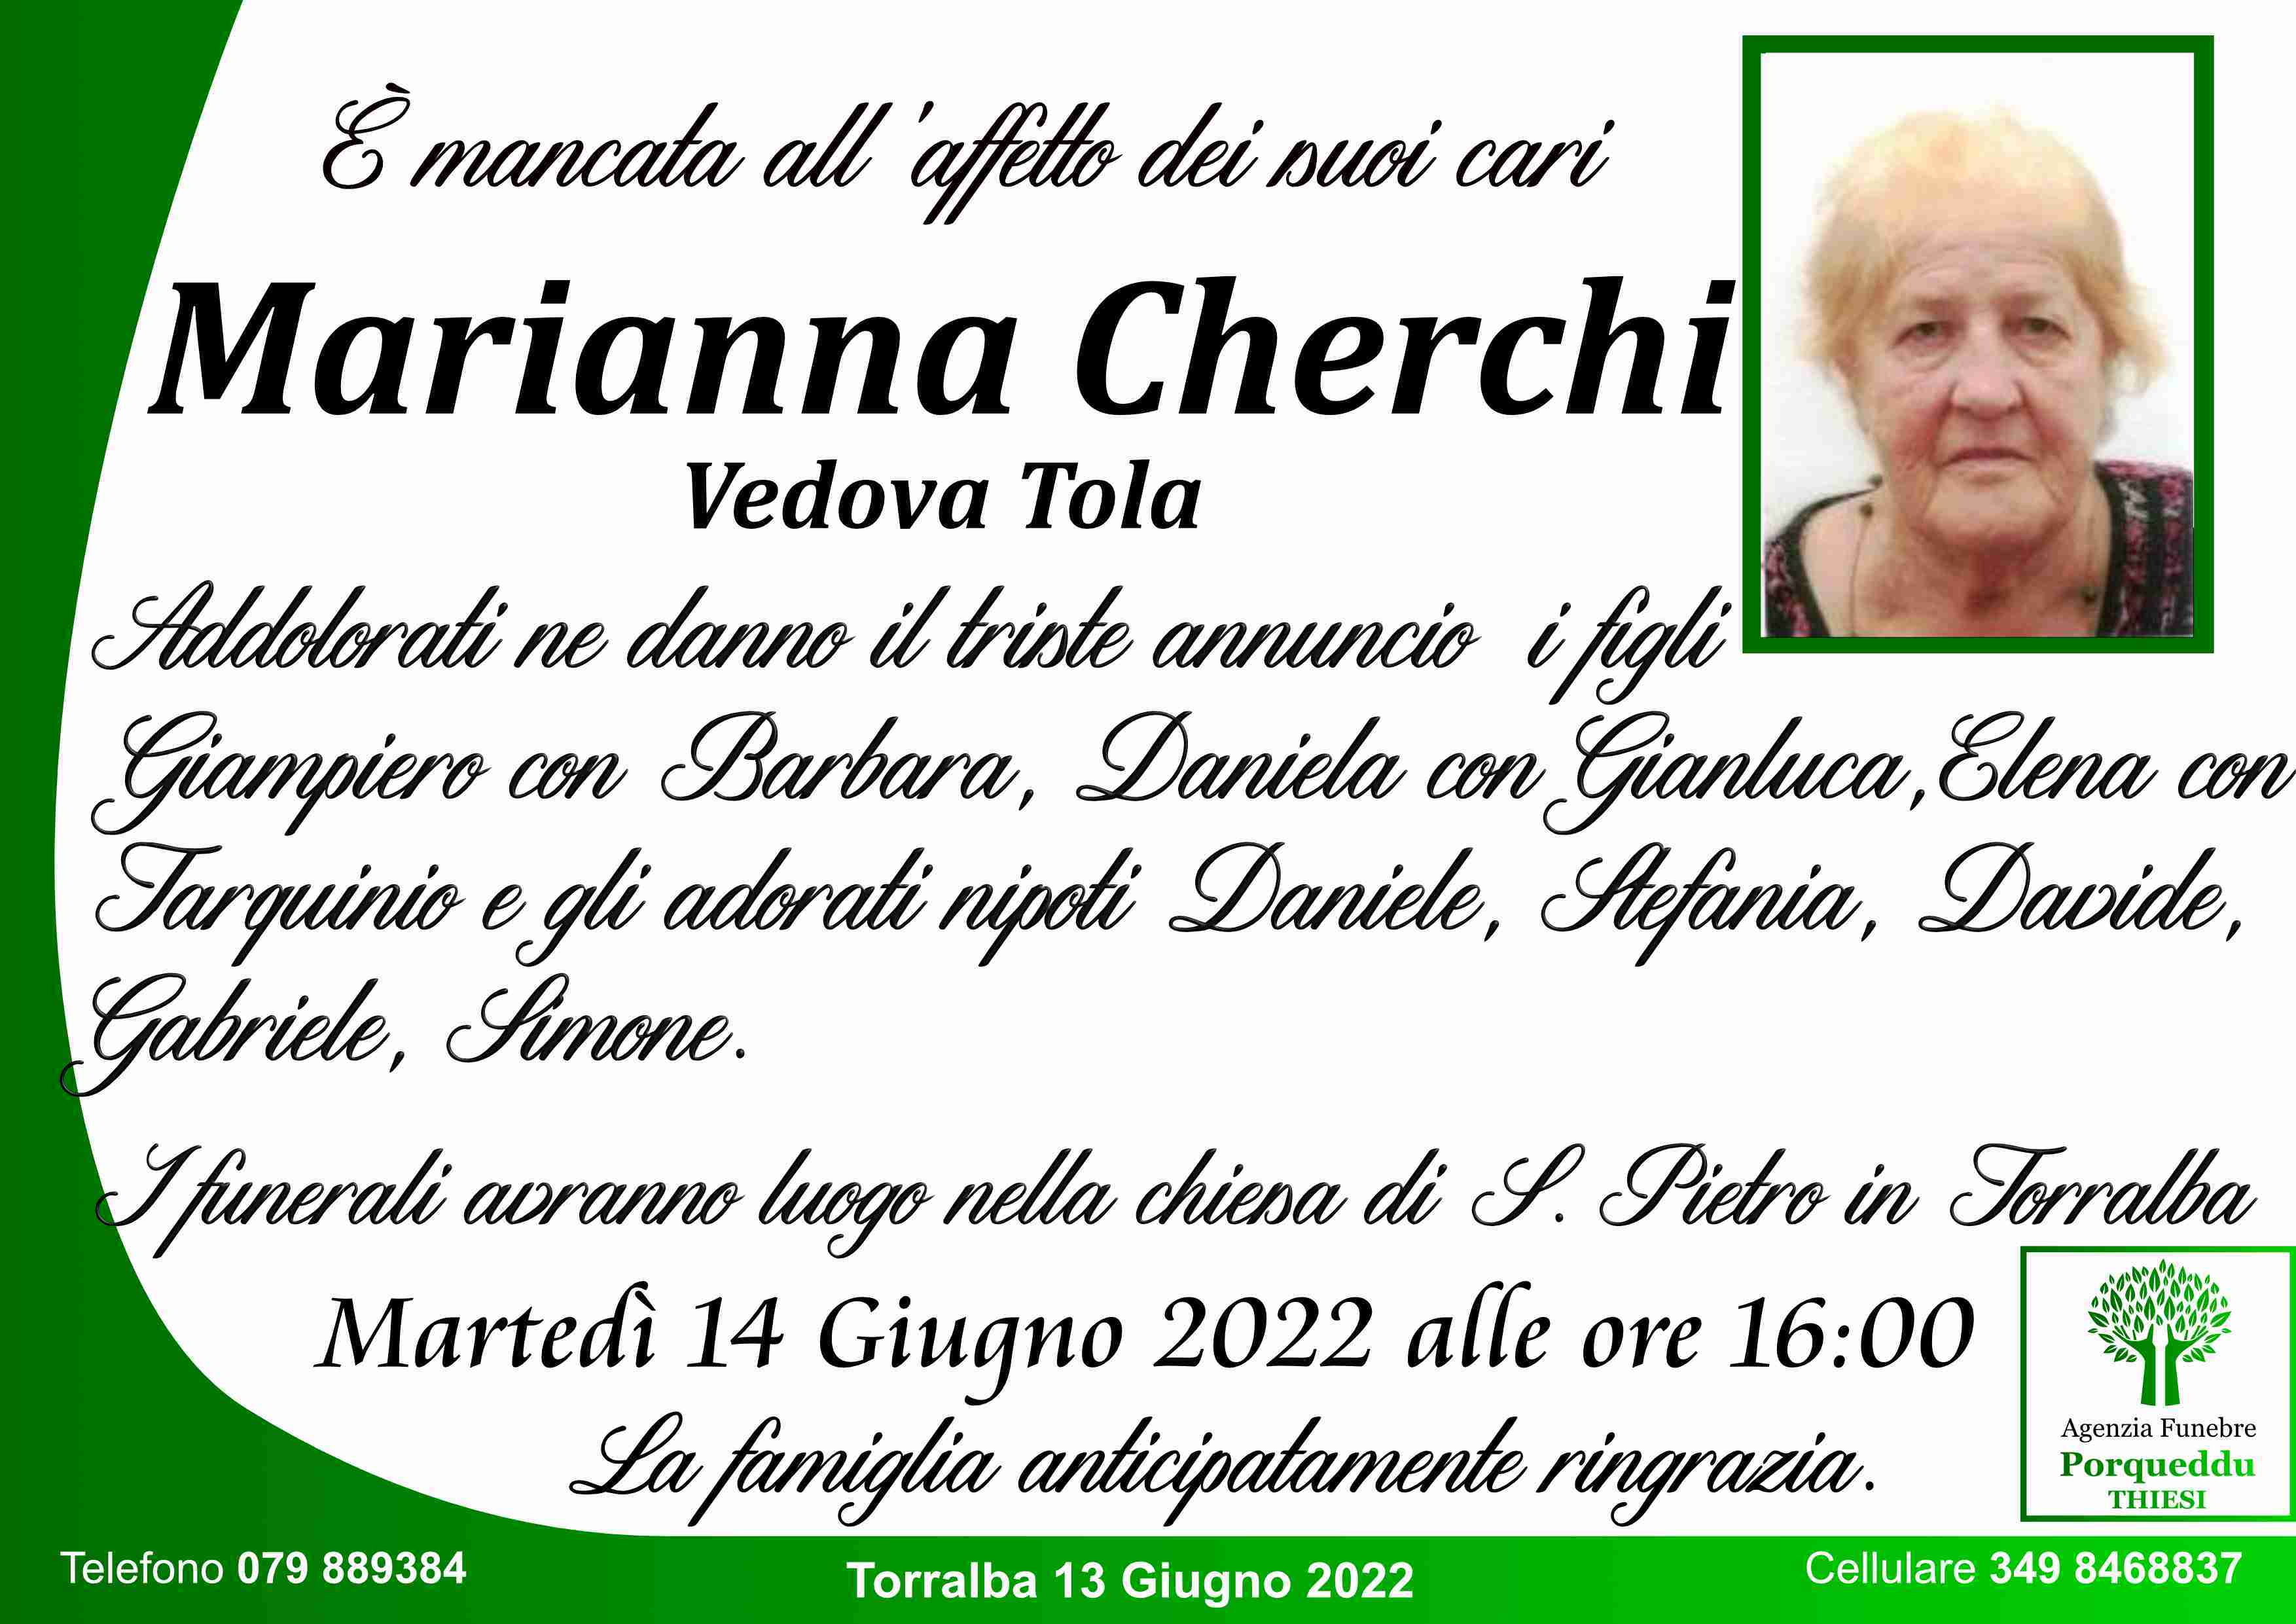 Marianna Cherchi